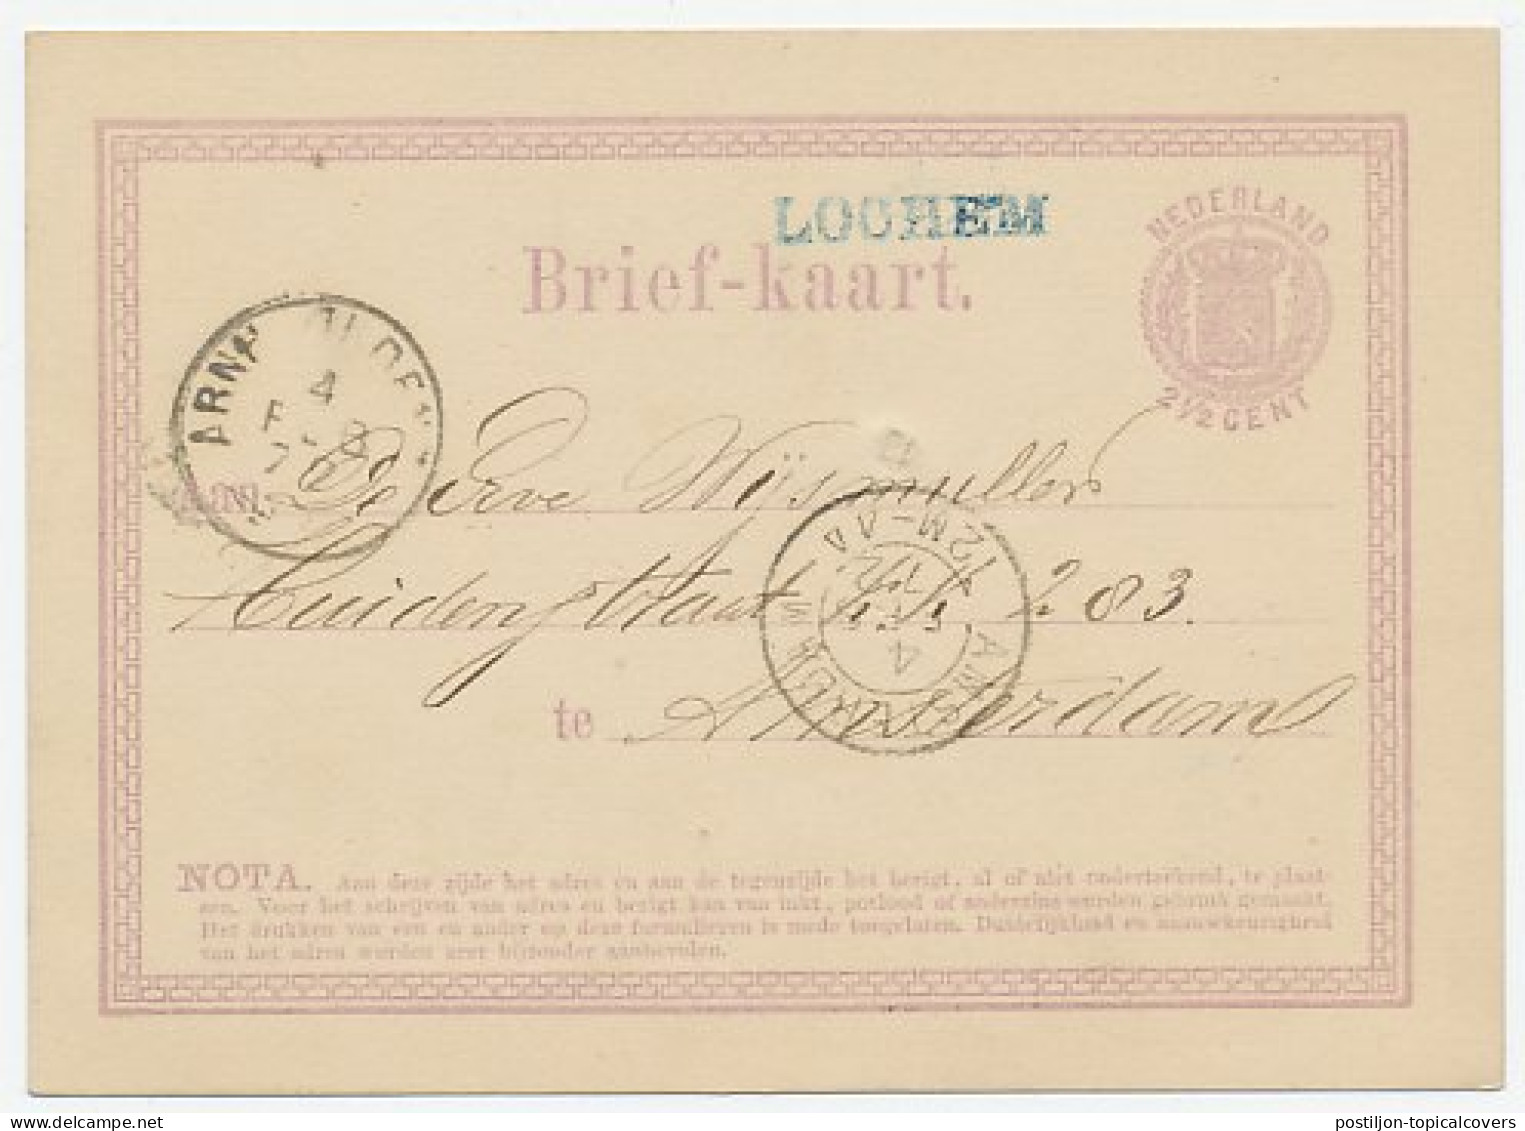 Naamstempel Lochem 1872 - Briefe U. Dokumente